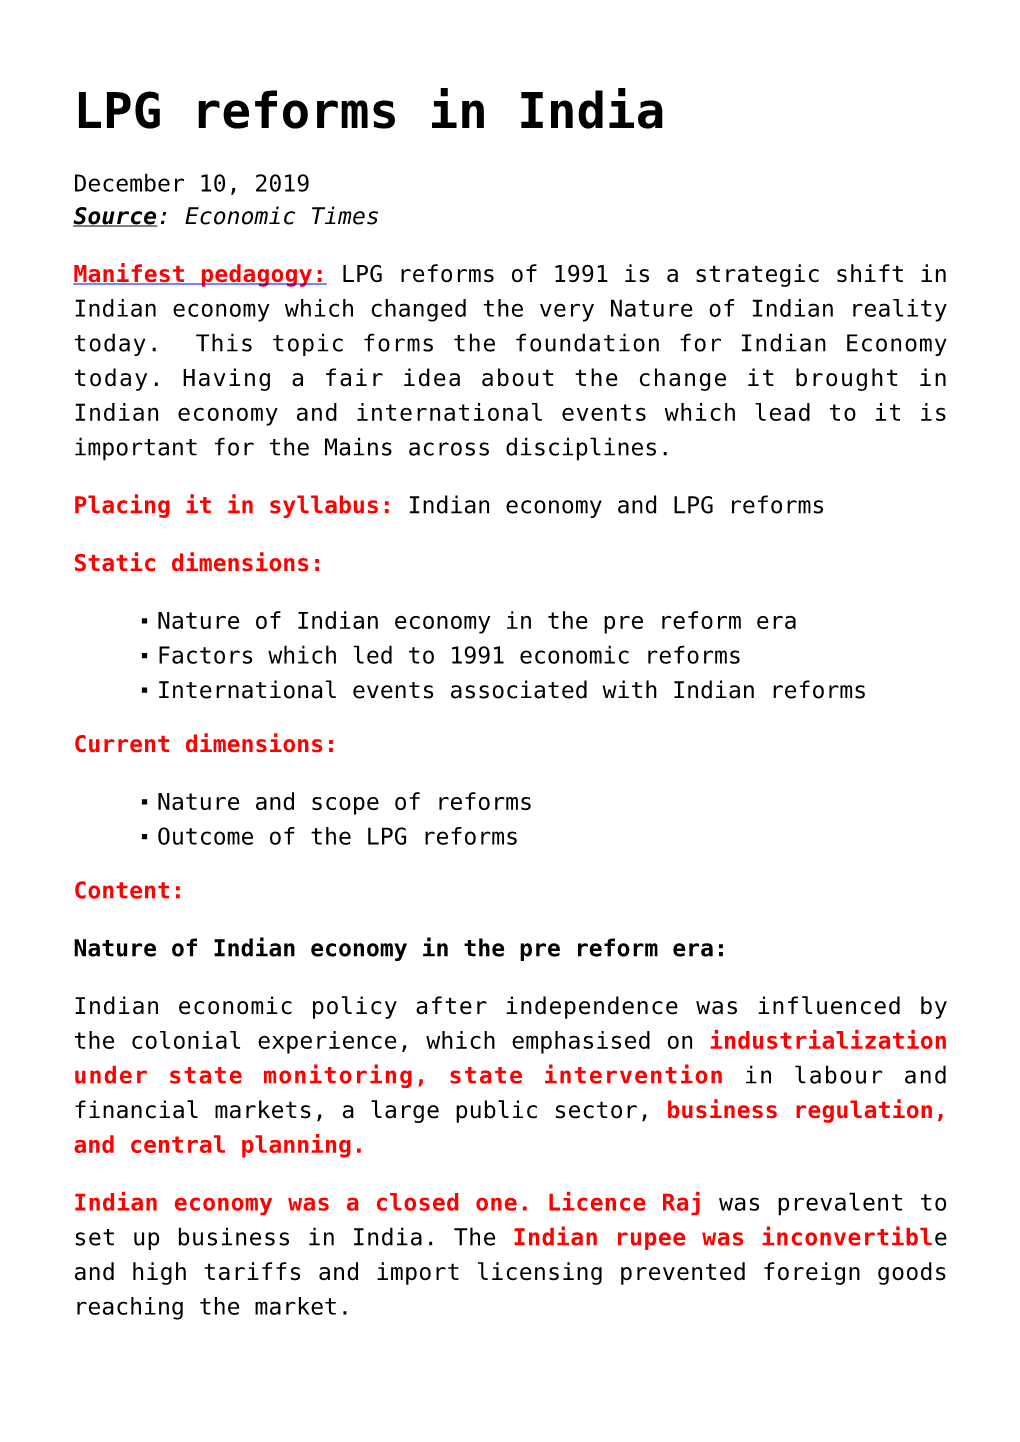 LPG Reforms in India